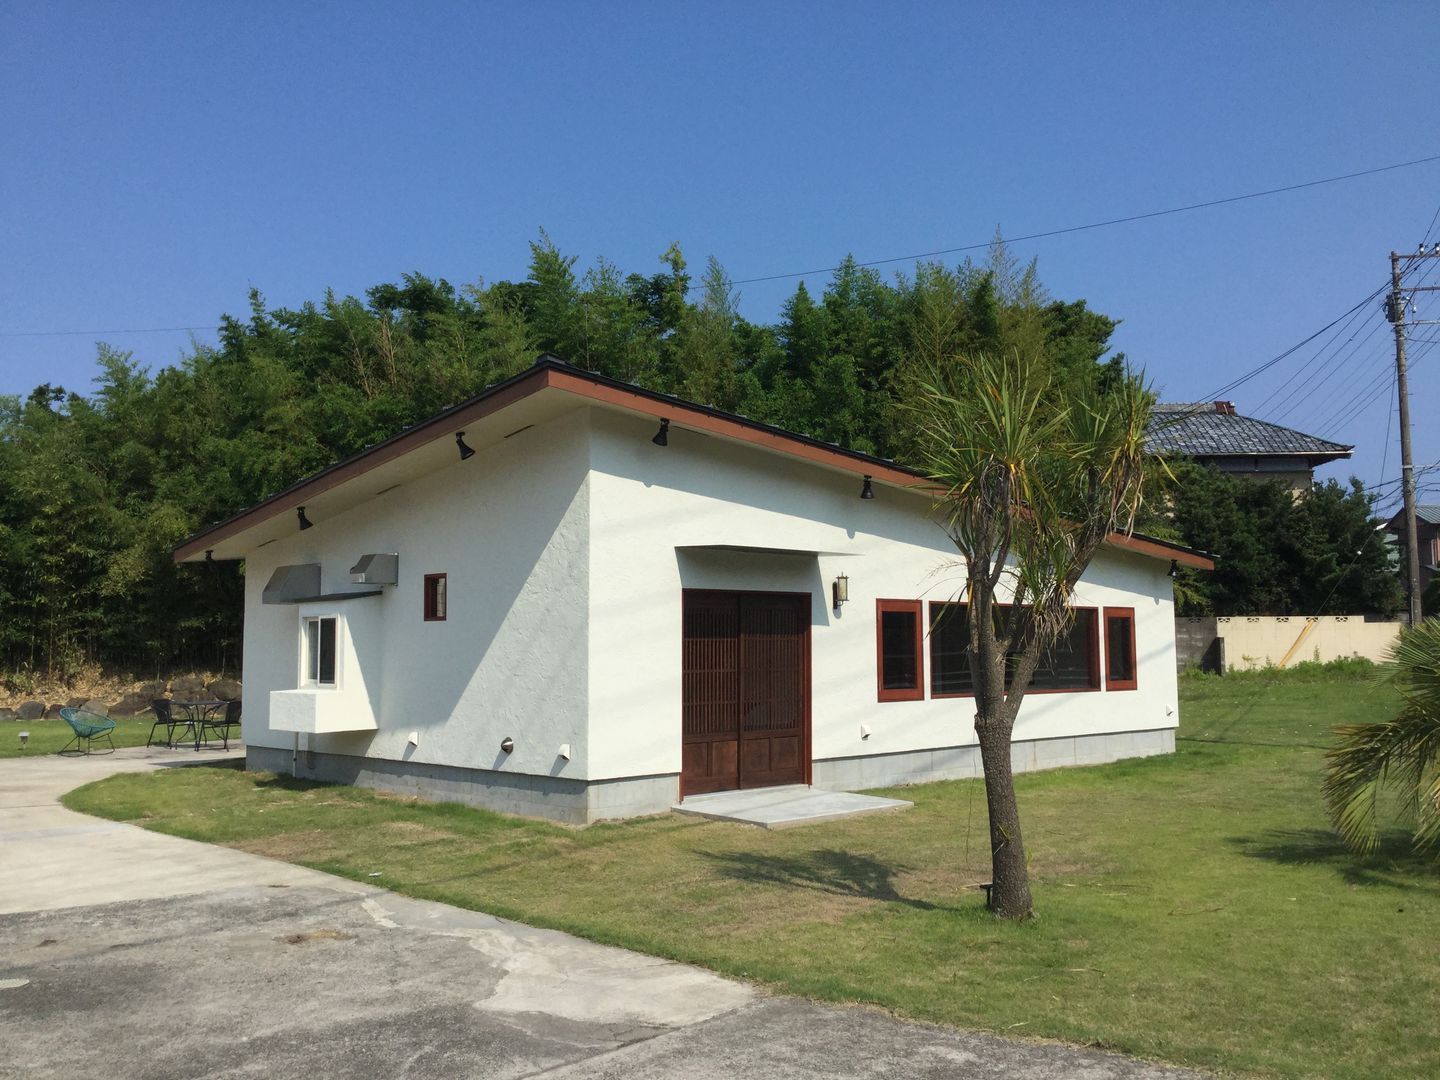 House in Torami, tai_tai STUDIO tai_tai STUDIO Casas de estilo rústico